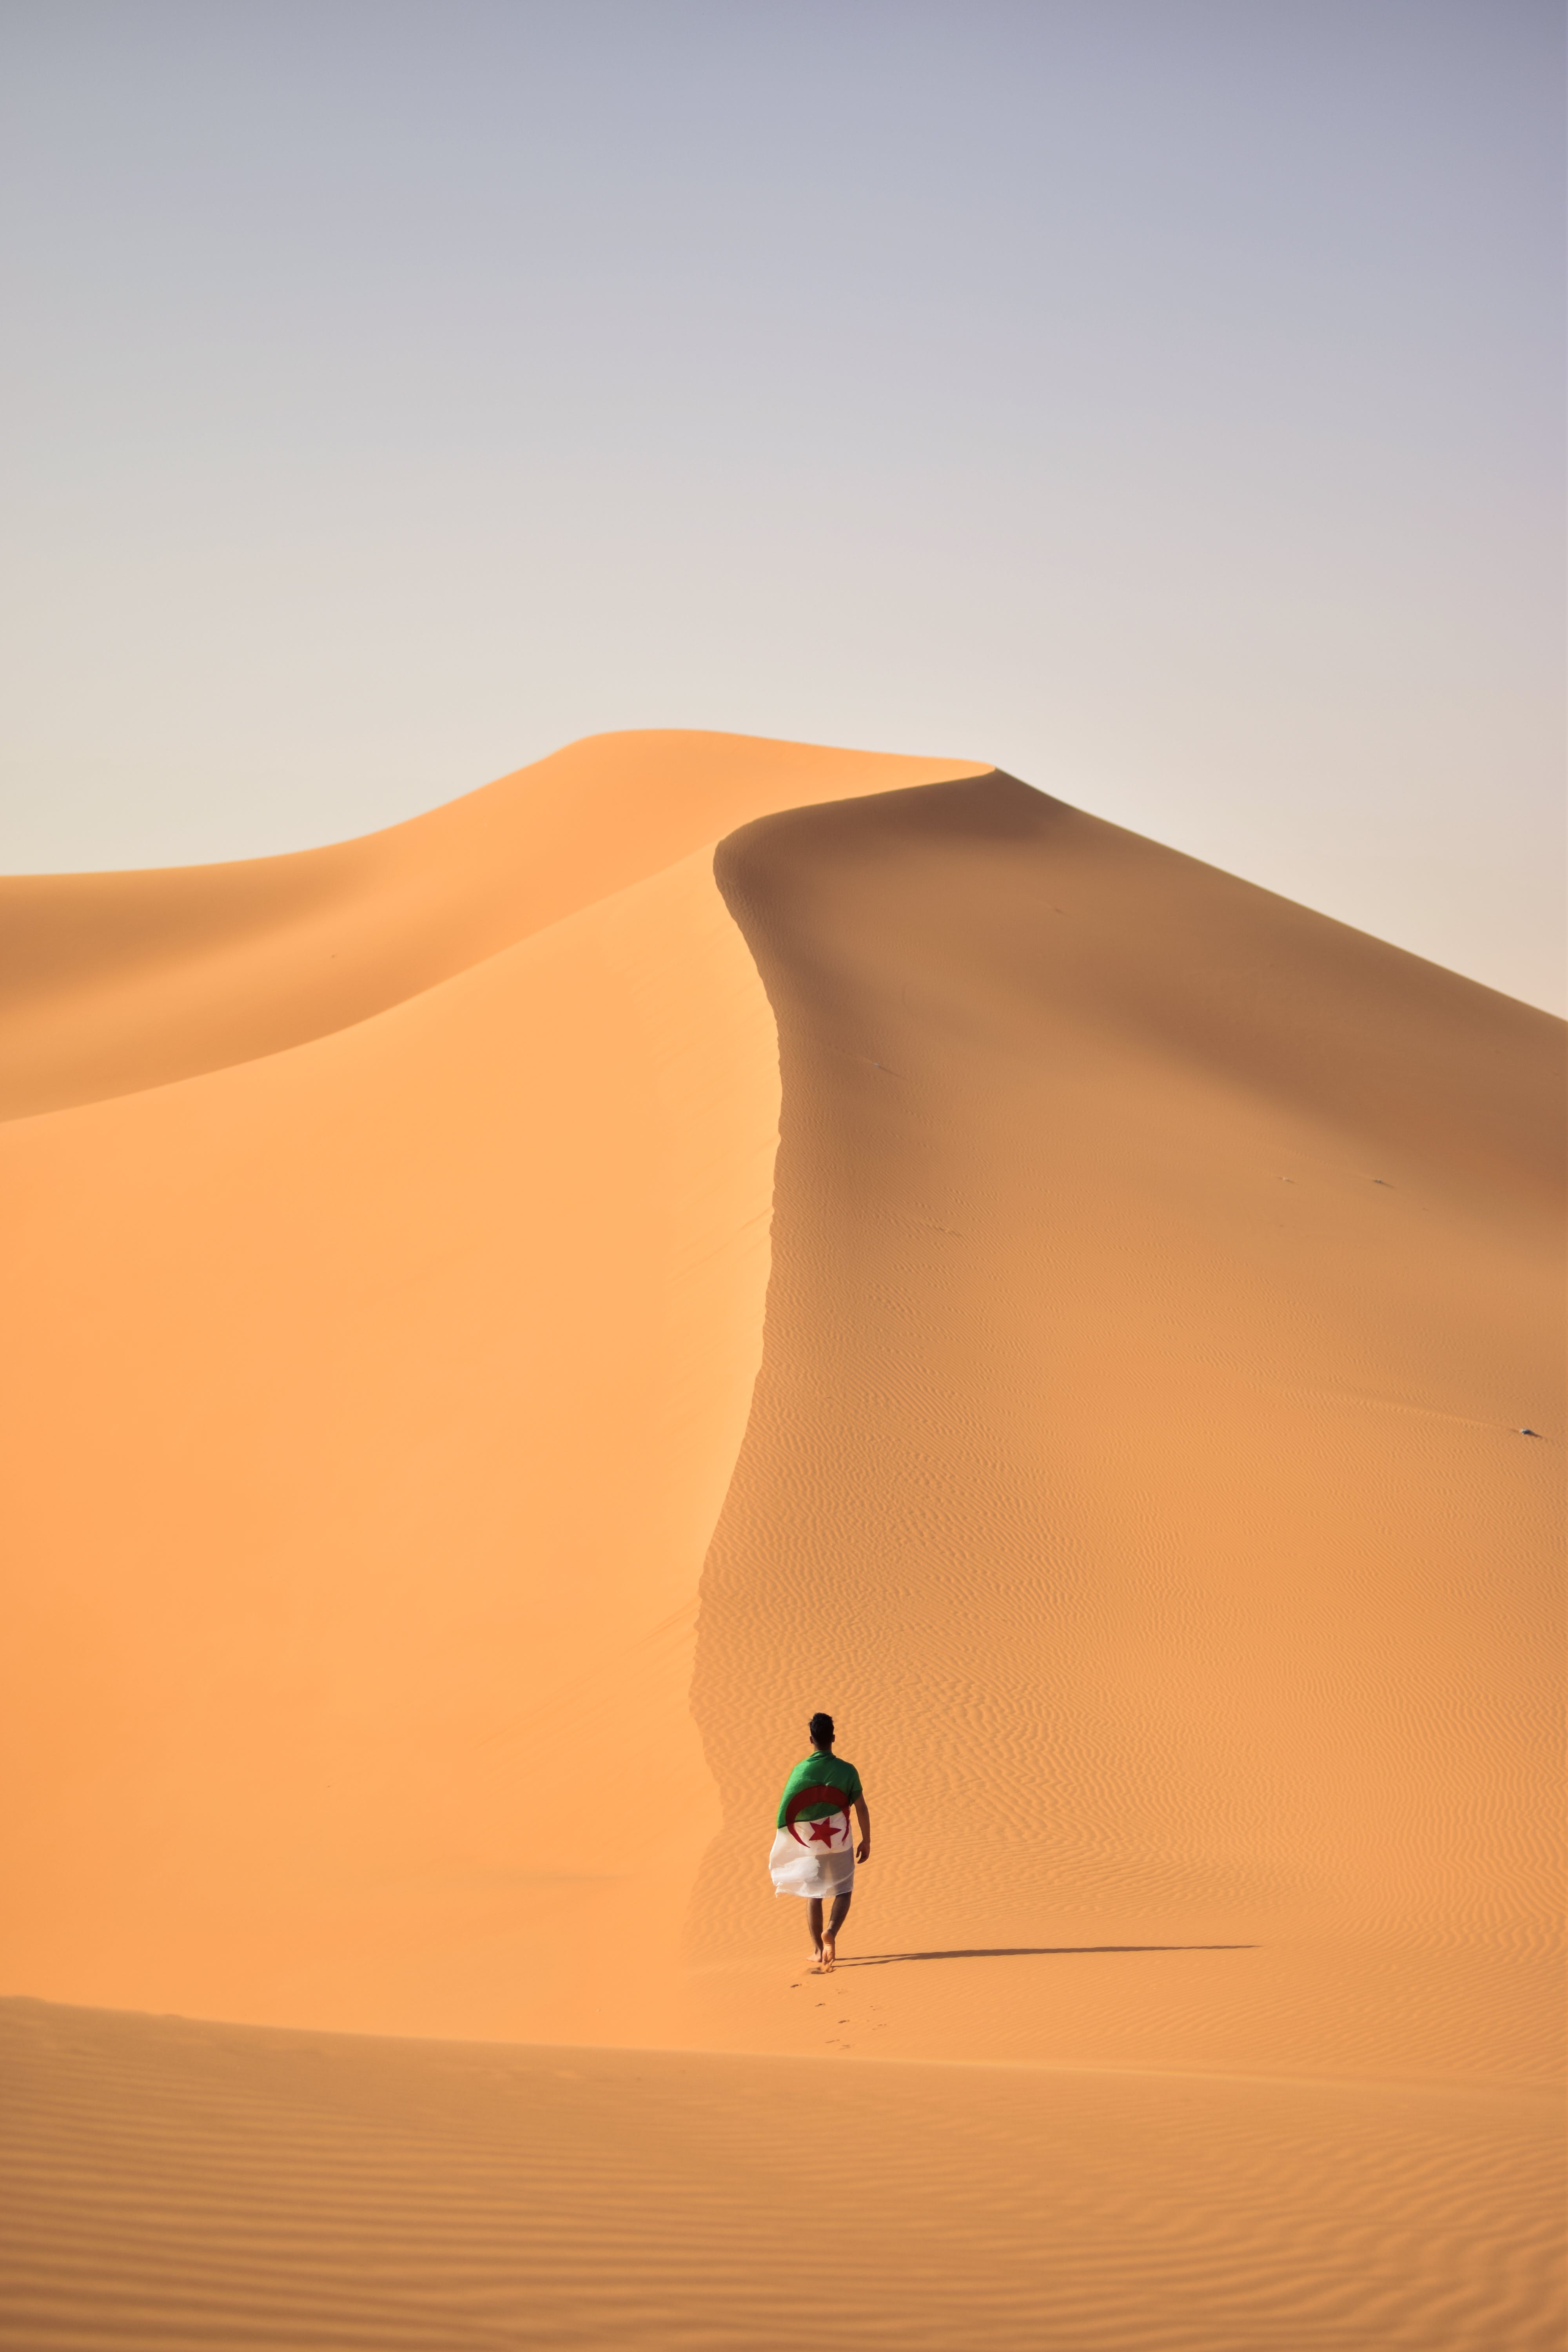 Desert Backgrounds Free Download - PixelsTalk.Net